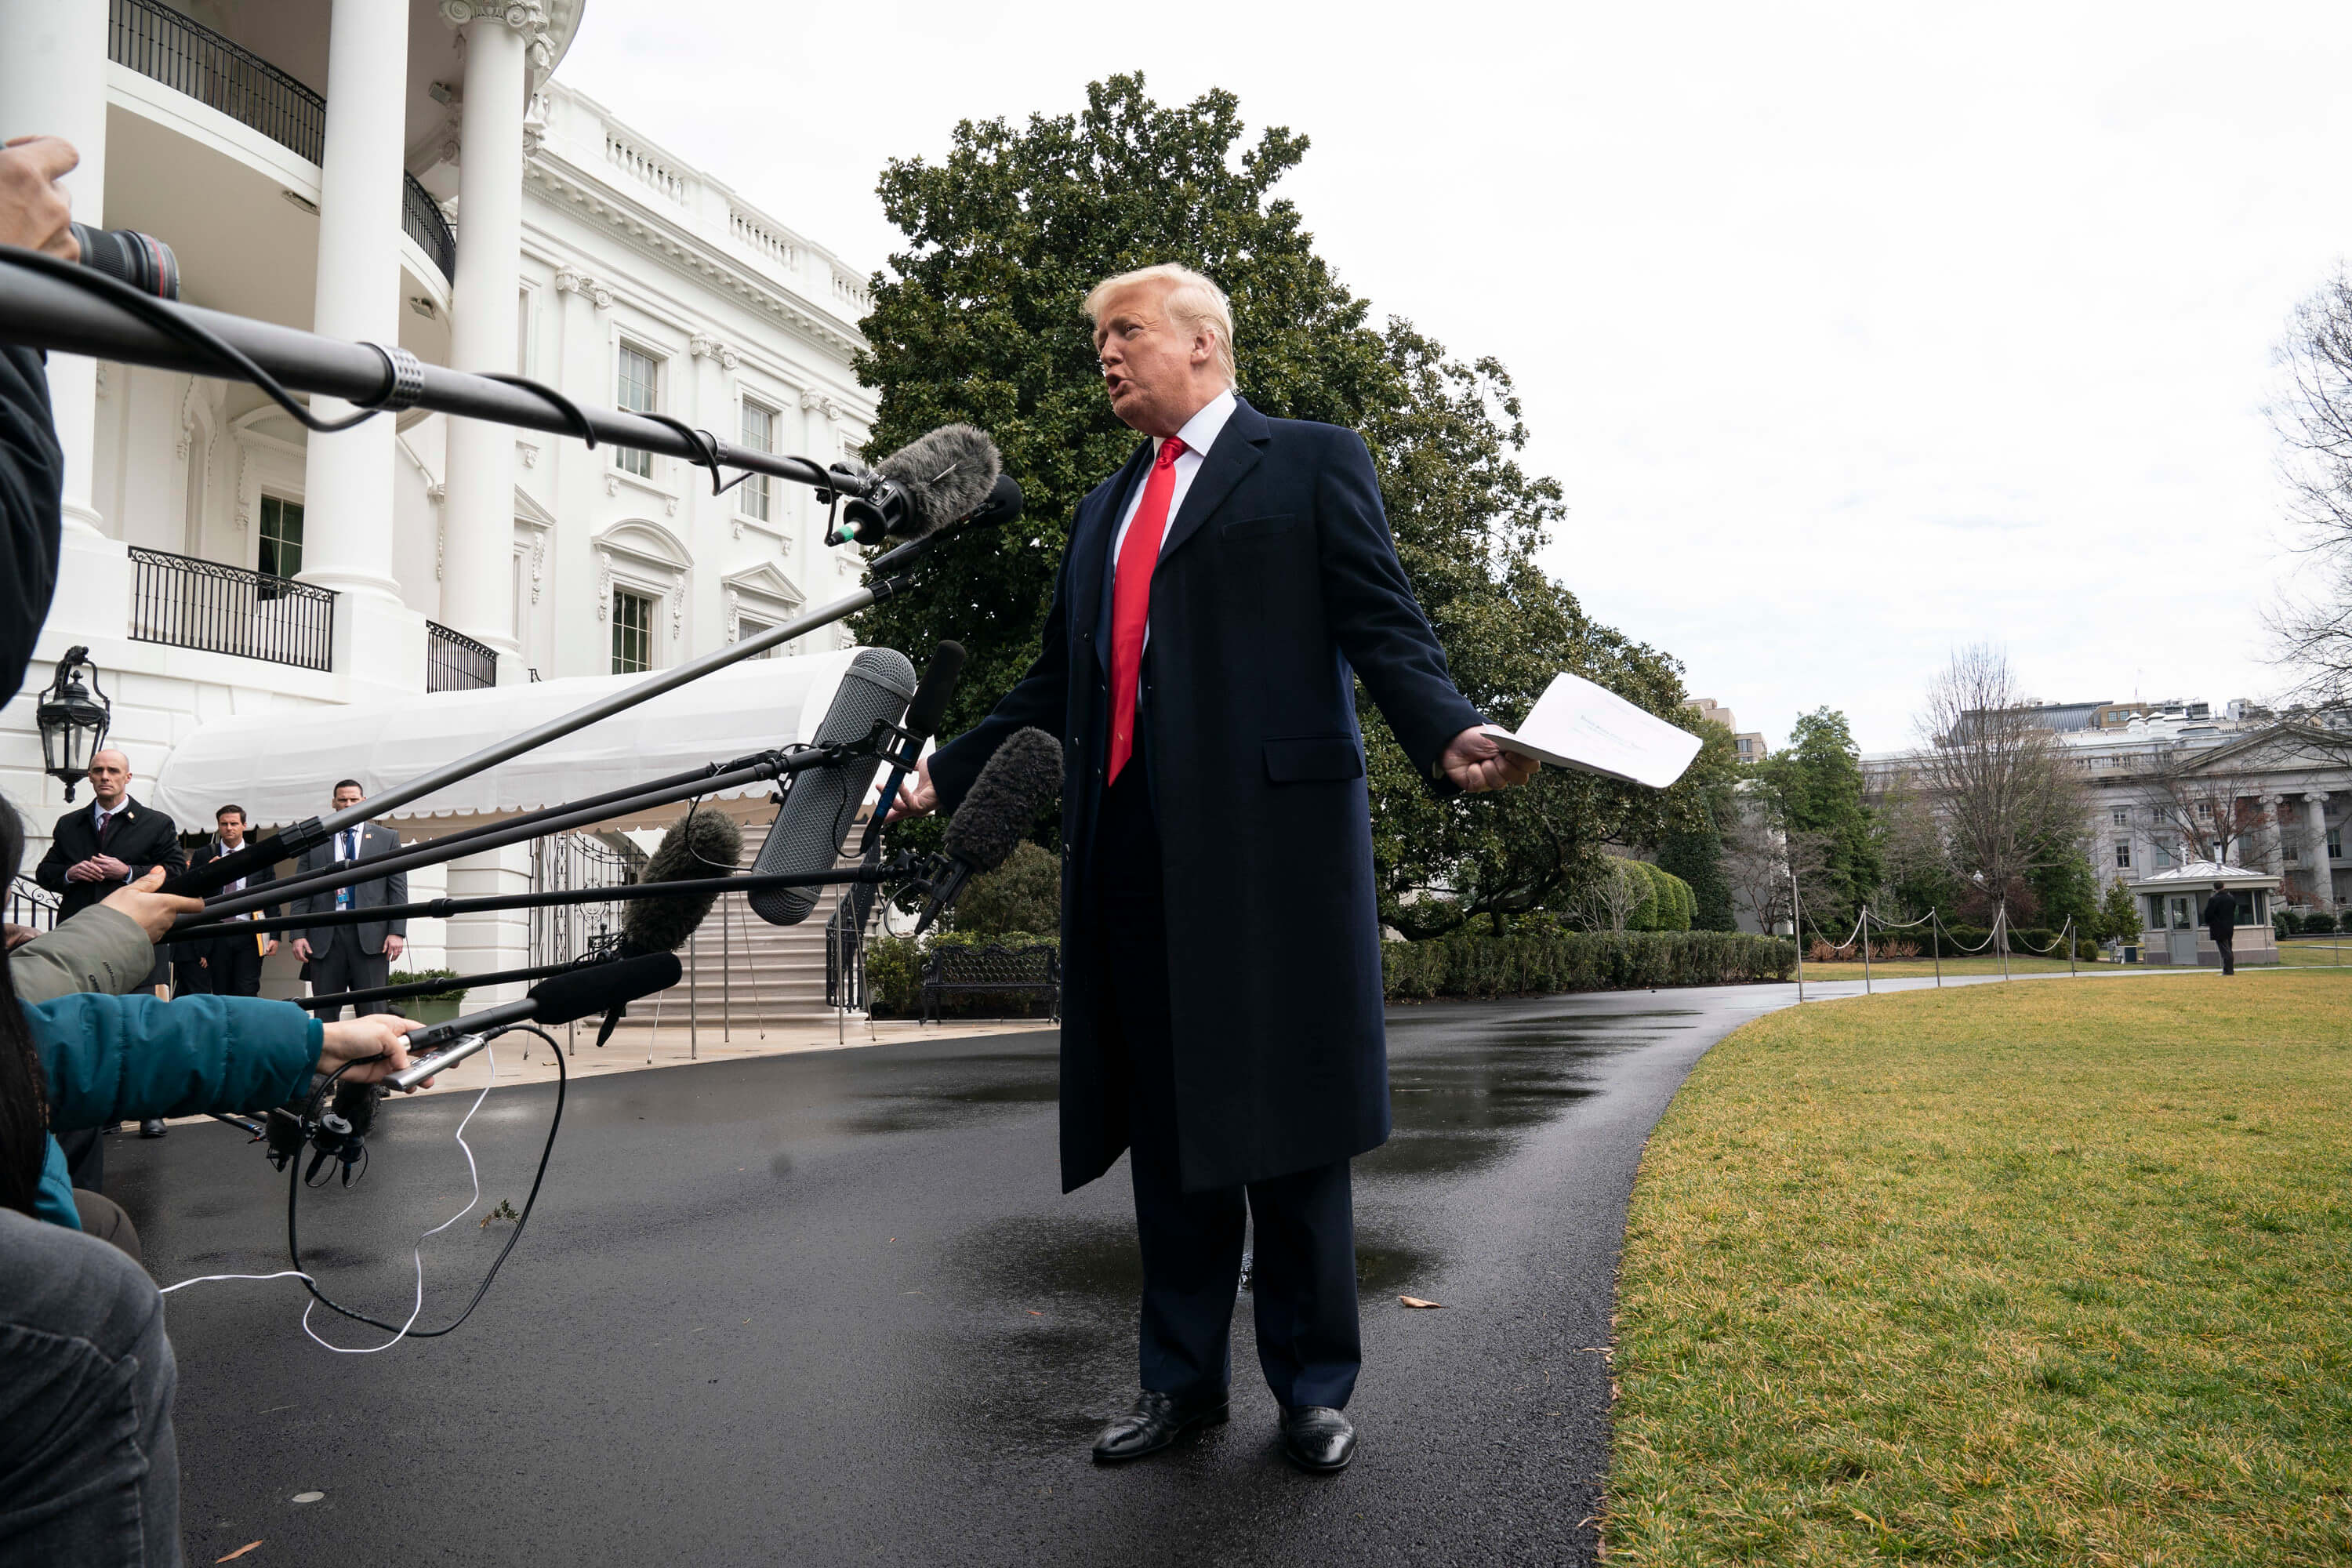 President Trump staat pers te woord voordat hij vertrekt naar North Carolina, 7 februari 2020. © The White House / Flickr